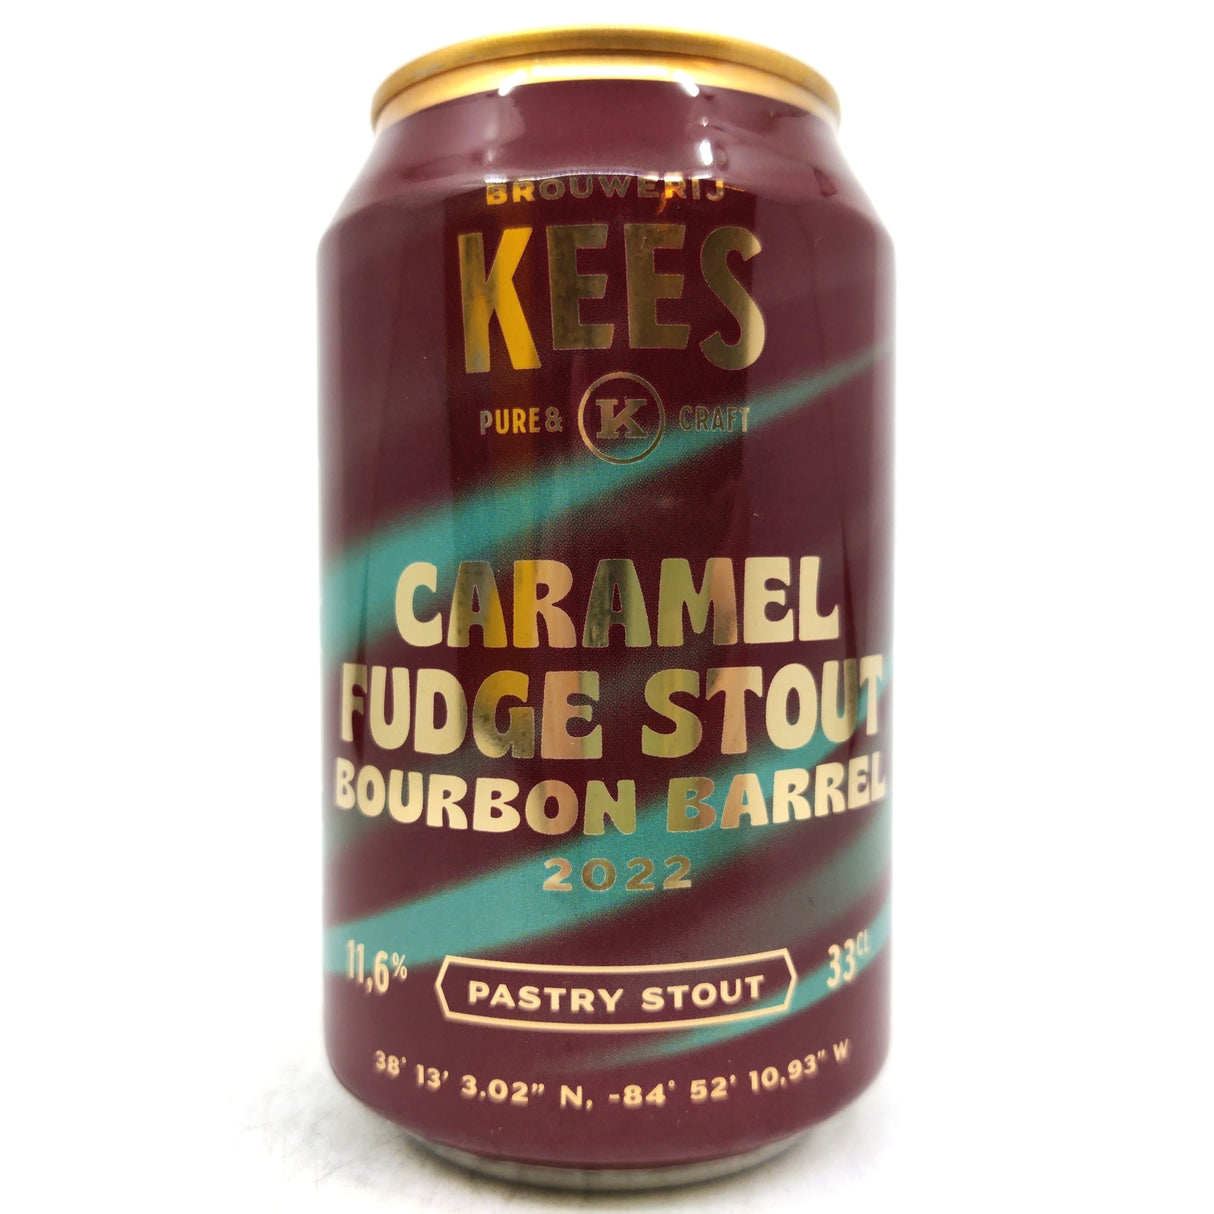 Kees Caramel Fudge Stout Bourbon Barrel 2022 11.6% (330ml can)-Hop Burns & Black